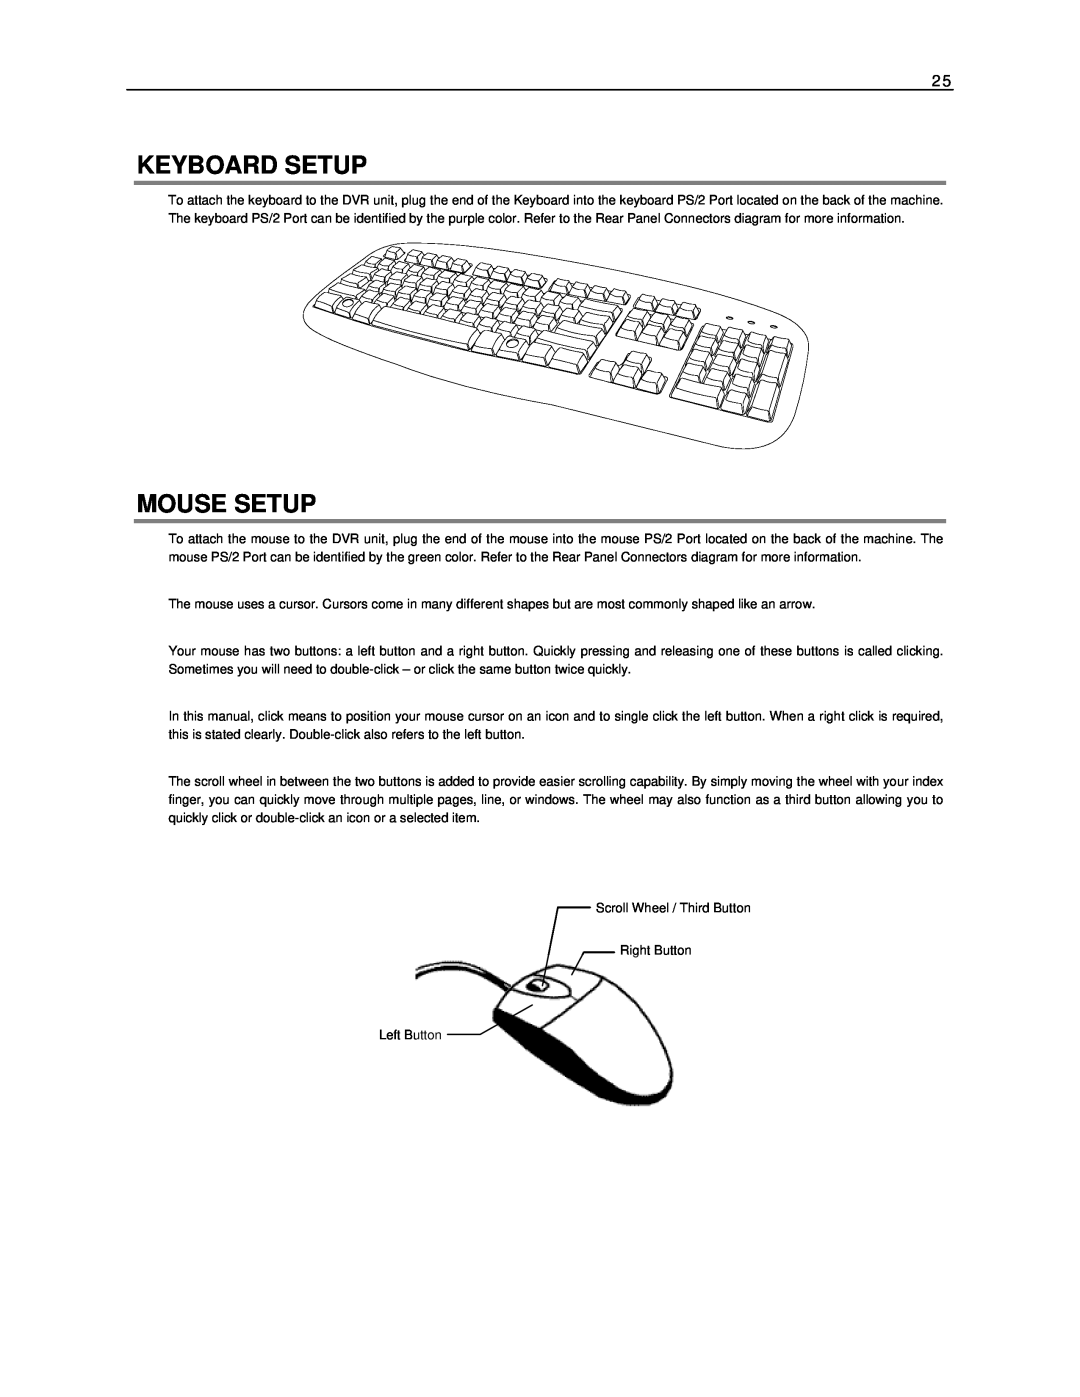 Toshiba NVS16-X, NVS32-X, NVS8-X user manual Keyboard Setup, Mouse Setup 